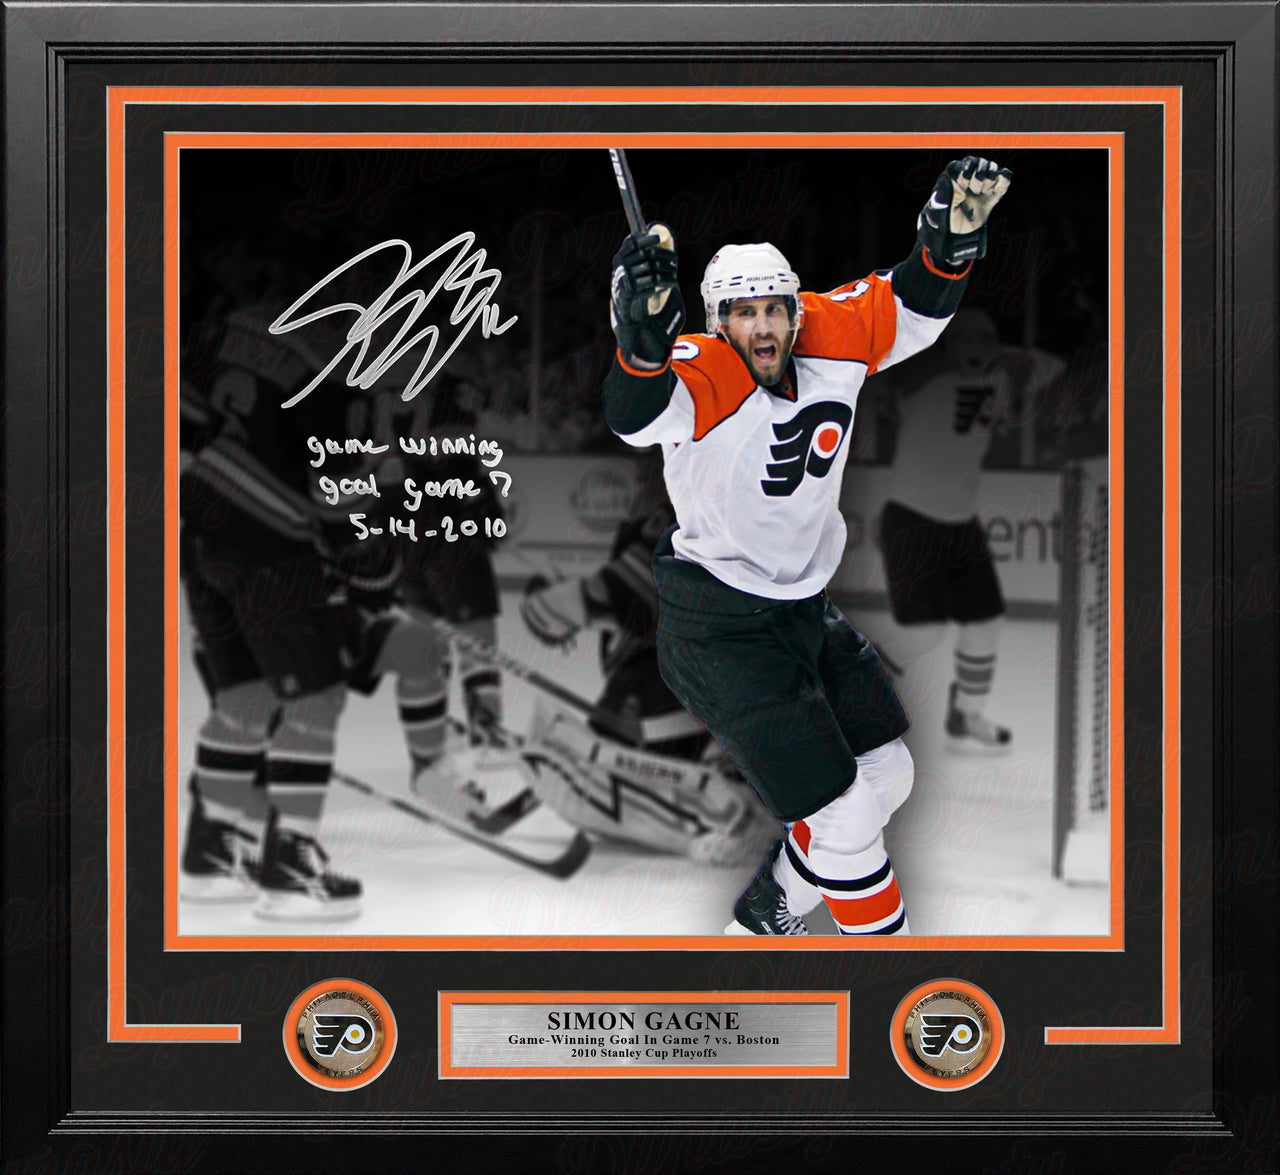 Simon Gagne Philadelphia Flyers Game-Winning Goal Autographed 16x20 Framed Photo w/ Date Inscription